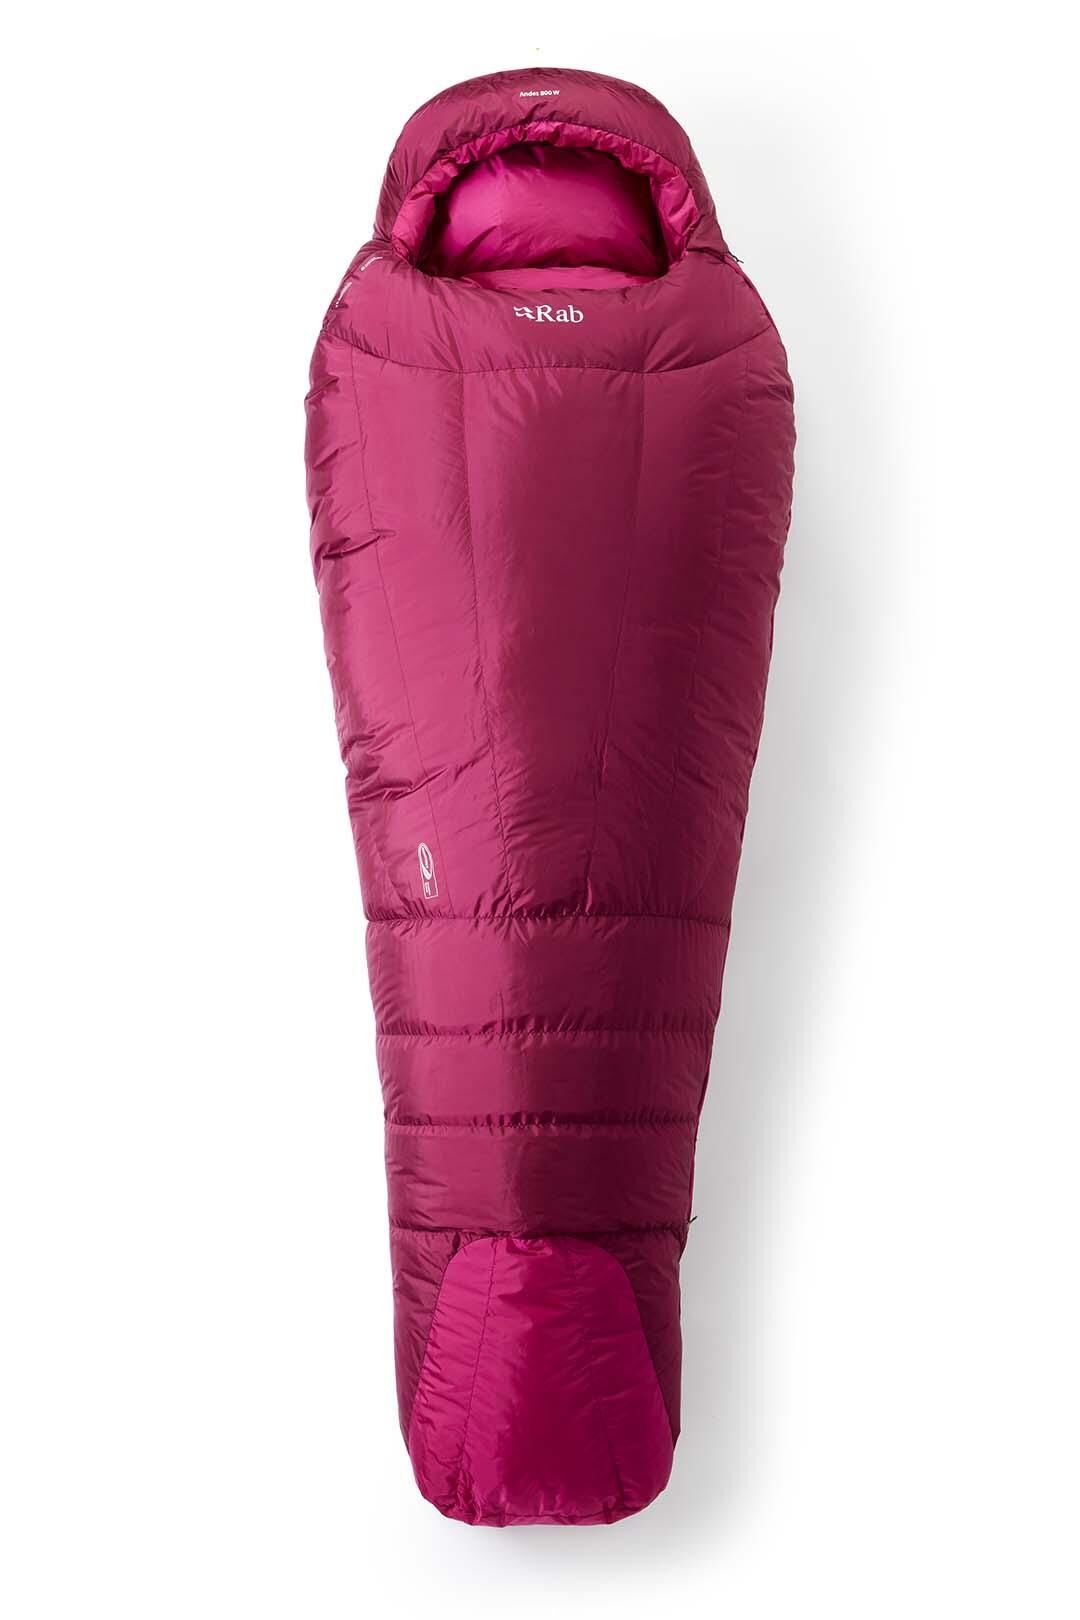 Rab - Andes 800 - Down sleeping bag - Women's